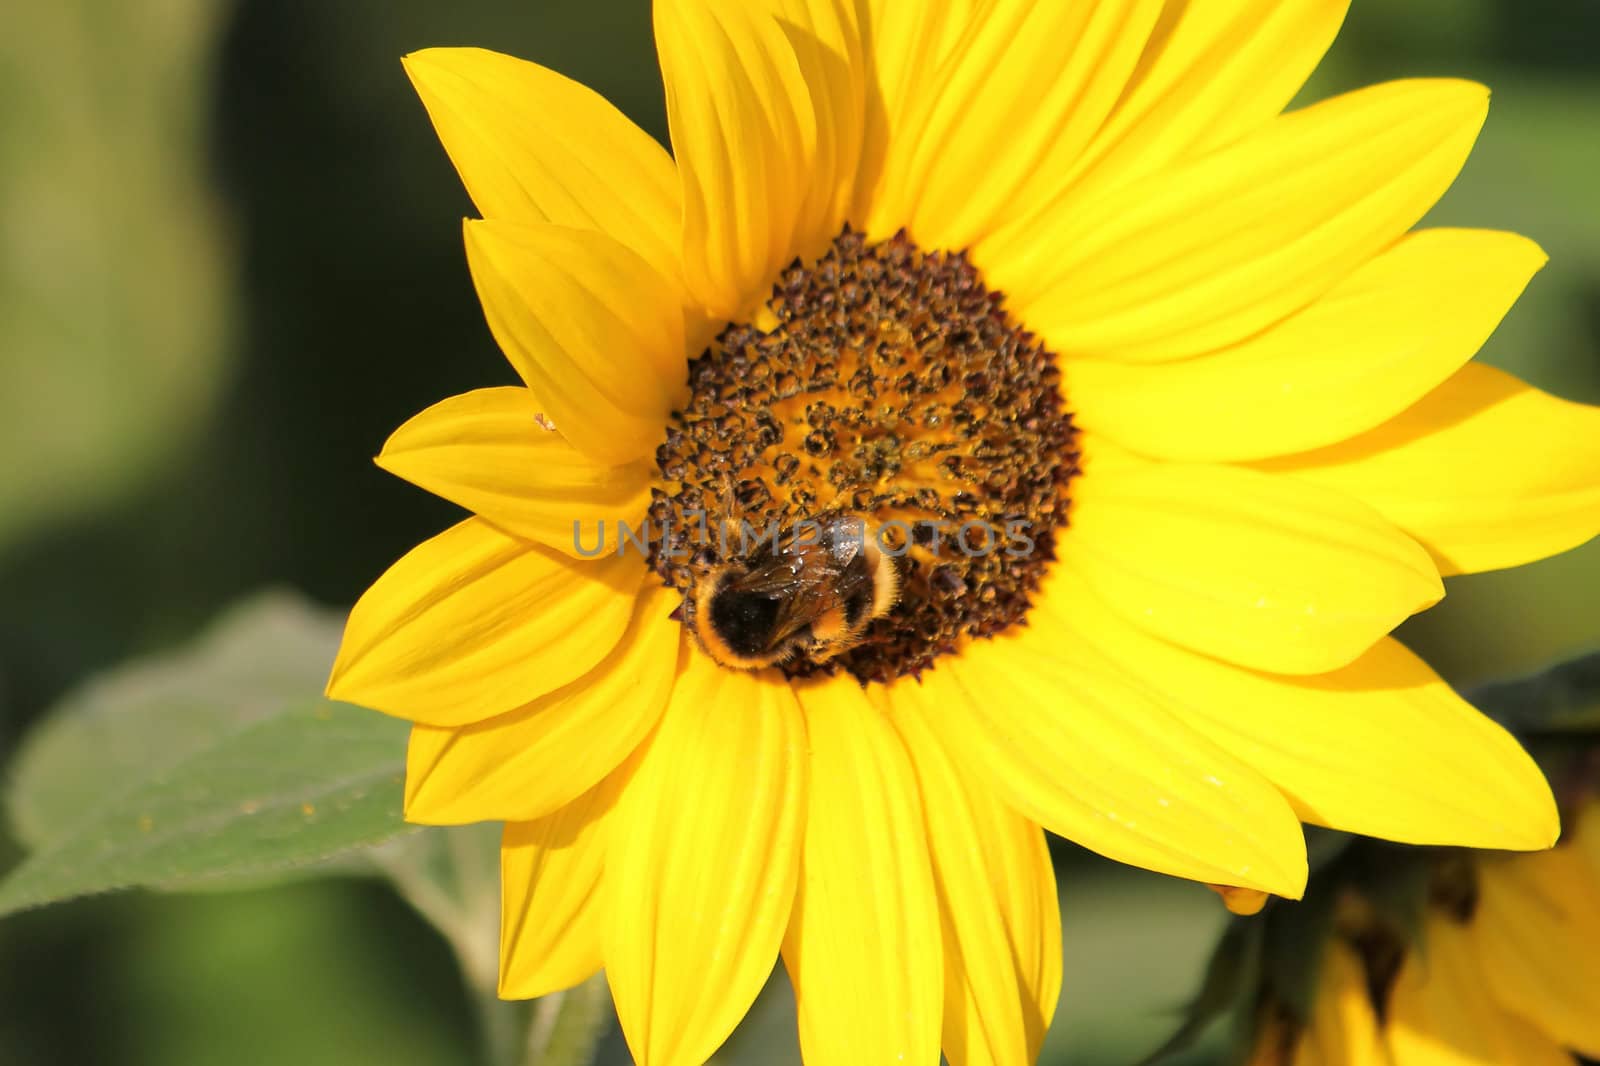 Bumblebee on a sunflower by Elenaphotos21